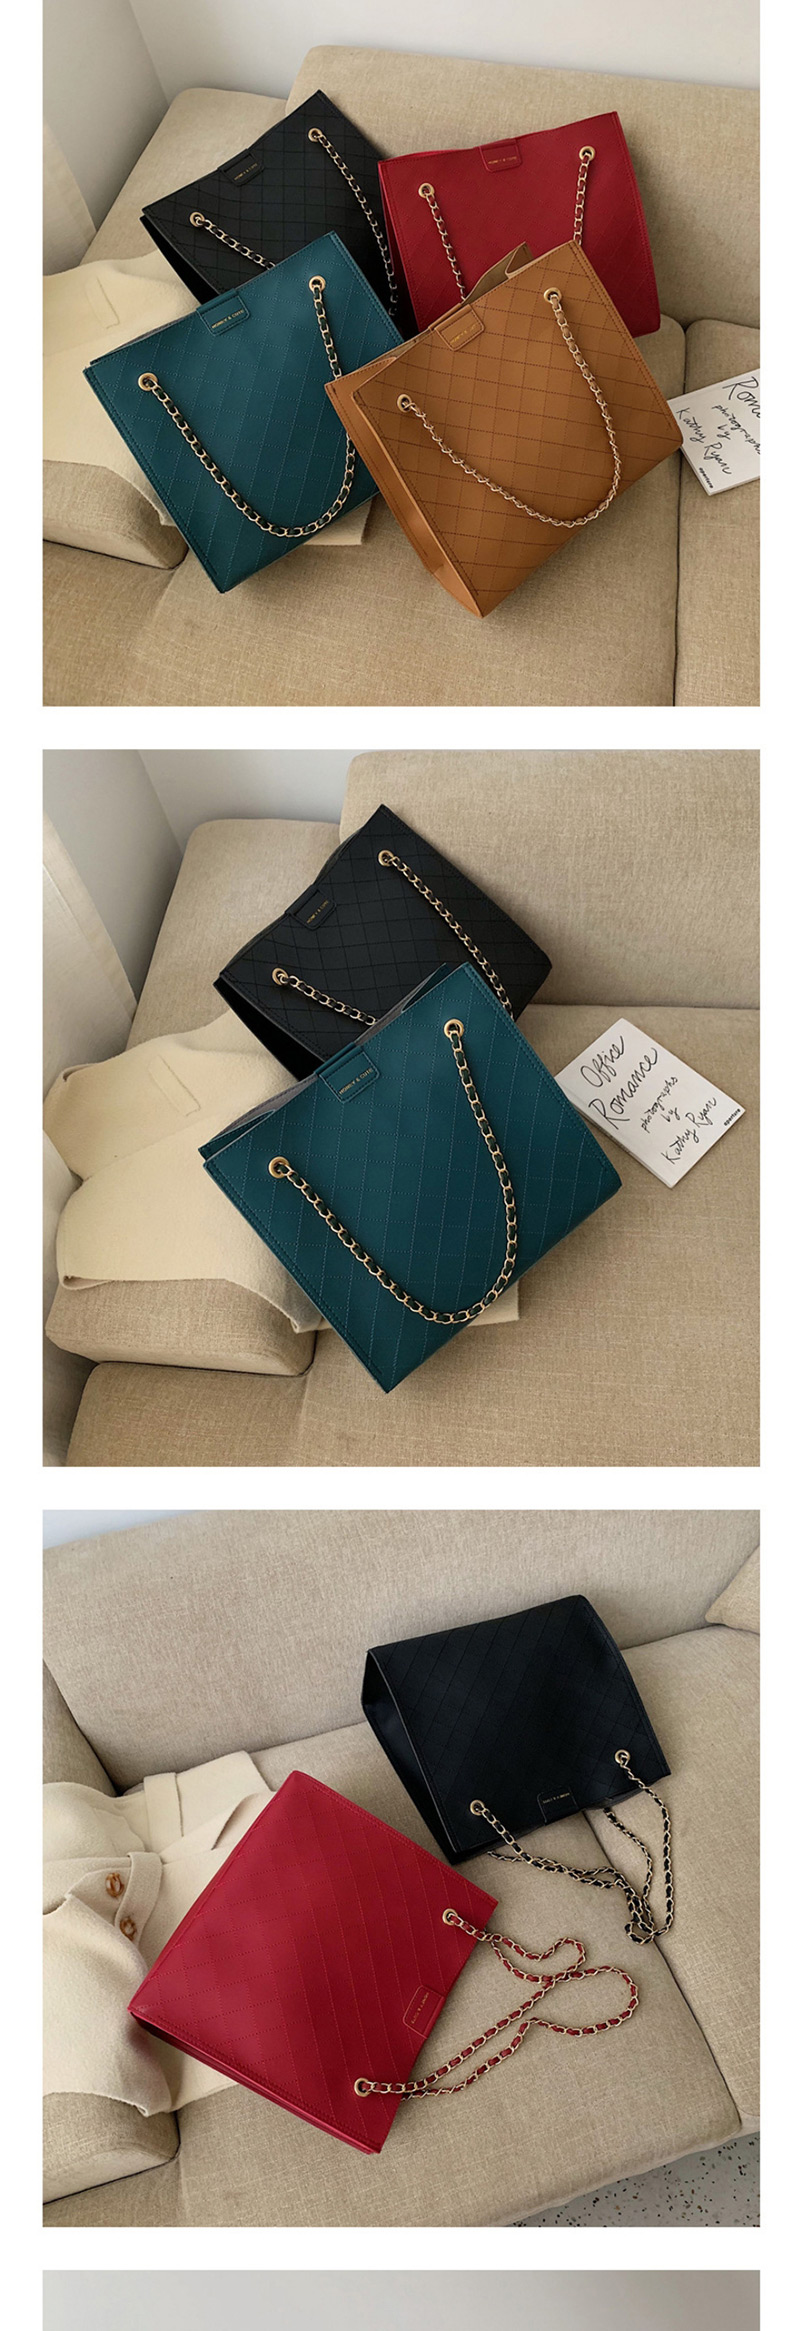 Fashion Blue Chain Rhombic Shoulder Bag,Messenger bags